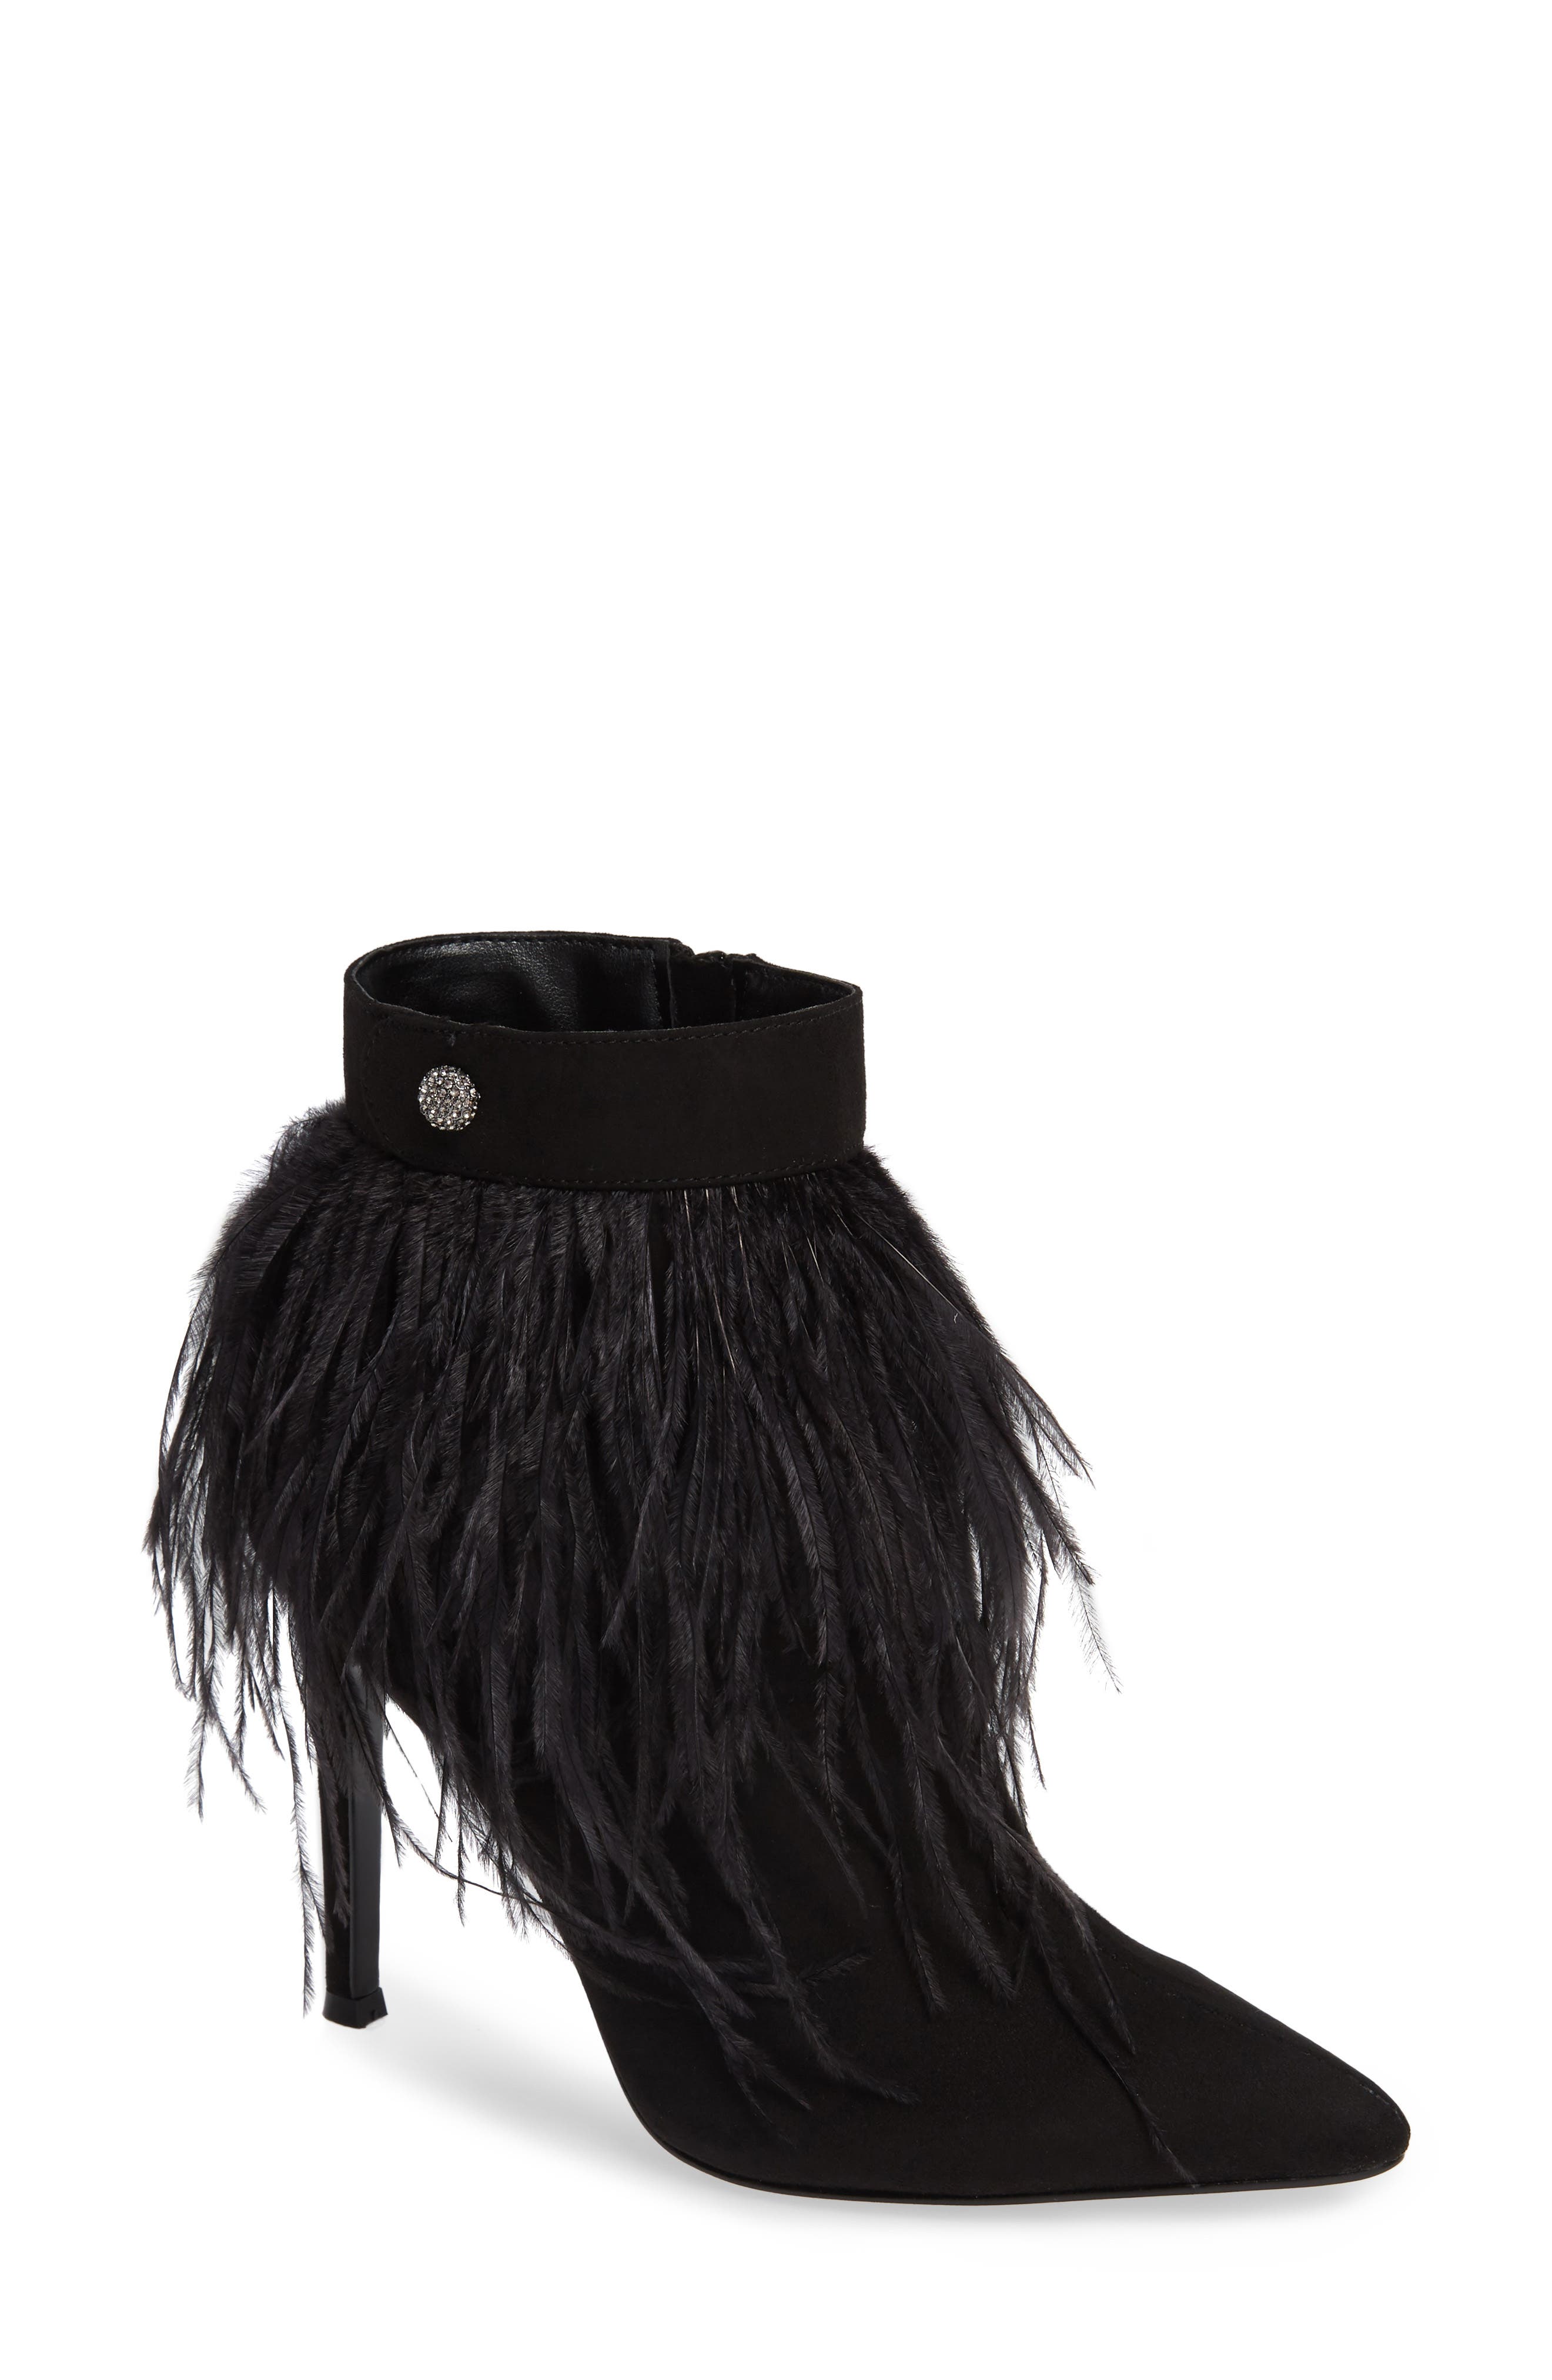 UPC 716142080960 product image for Women's Nina Danella Feather Bootie, Size 8.5 M - Black | upcitemdb.com